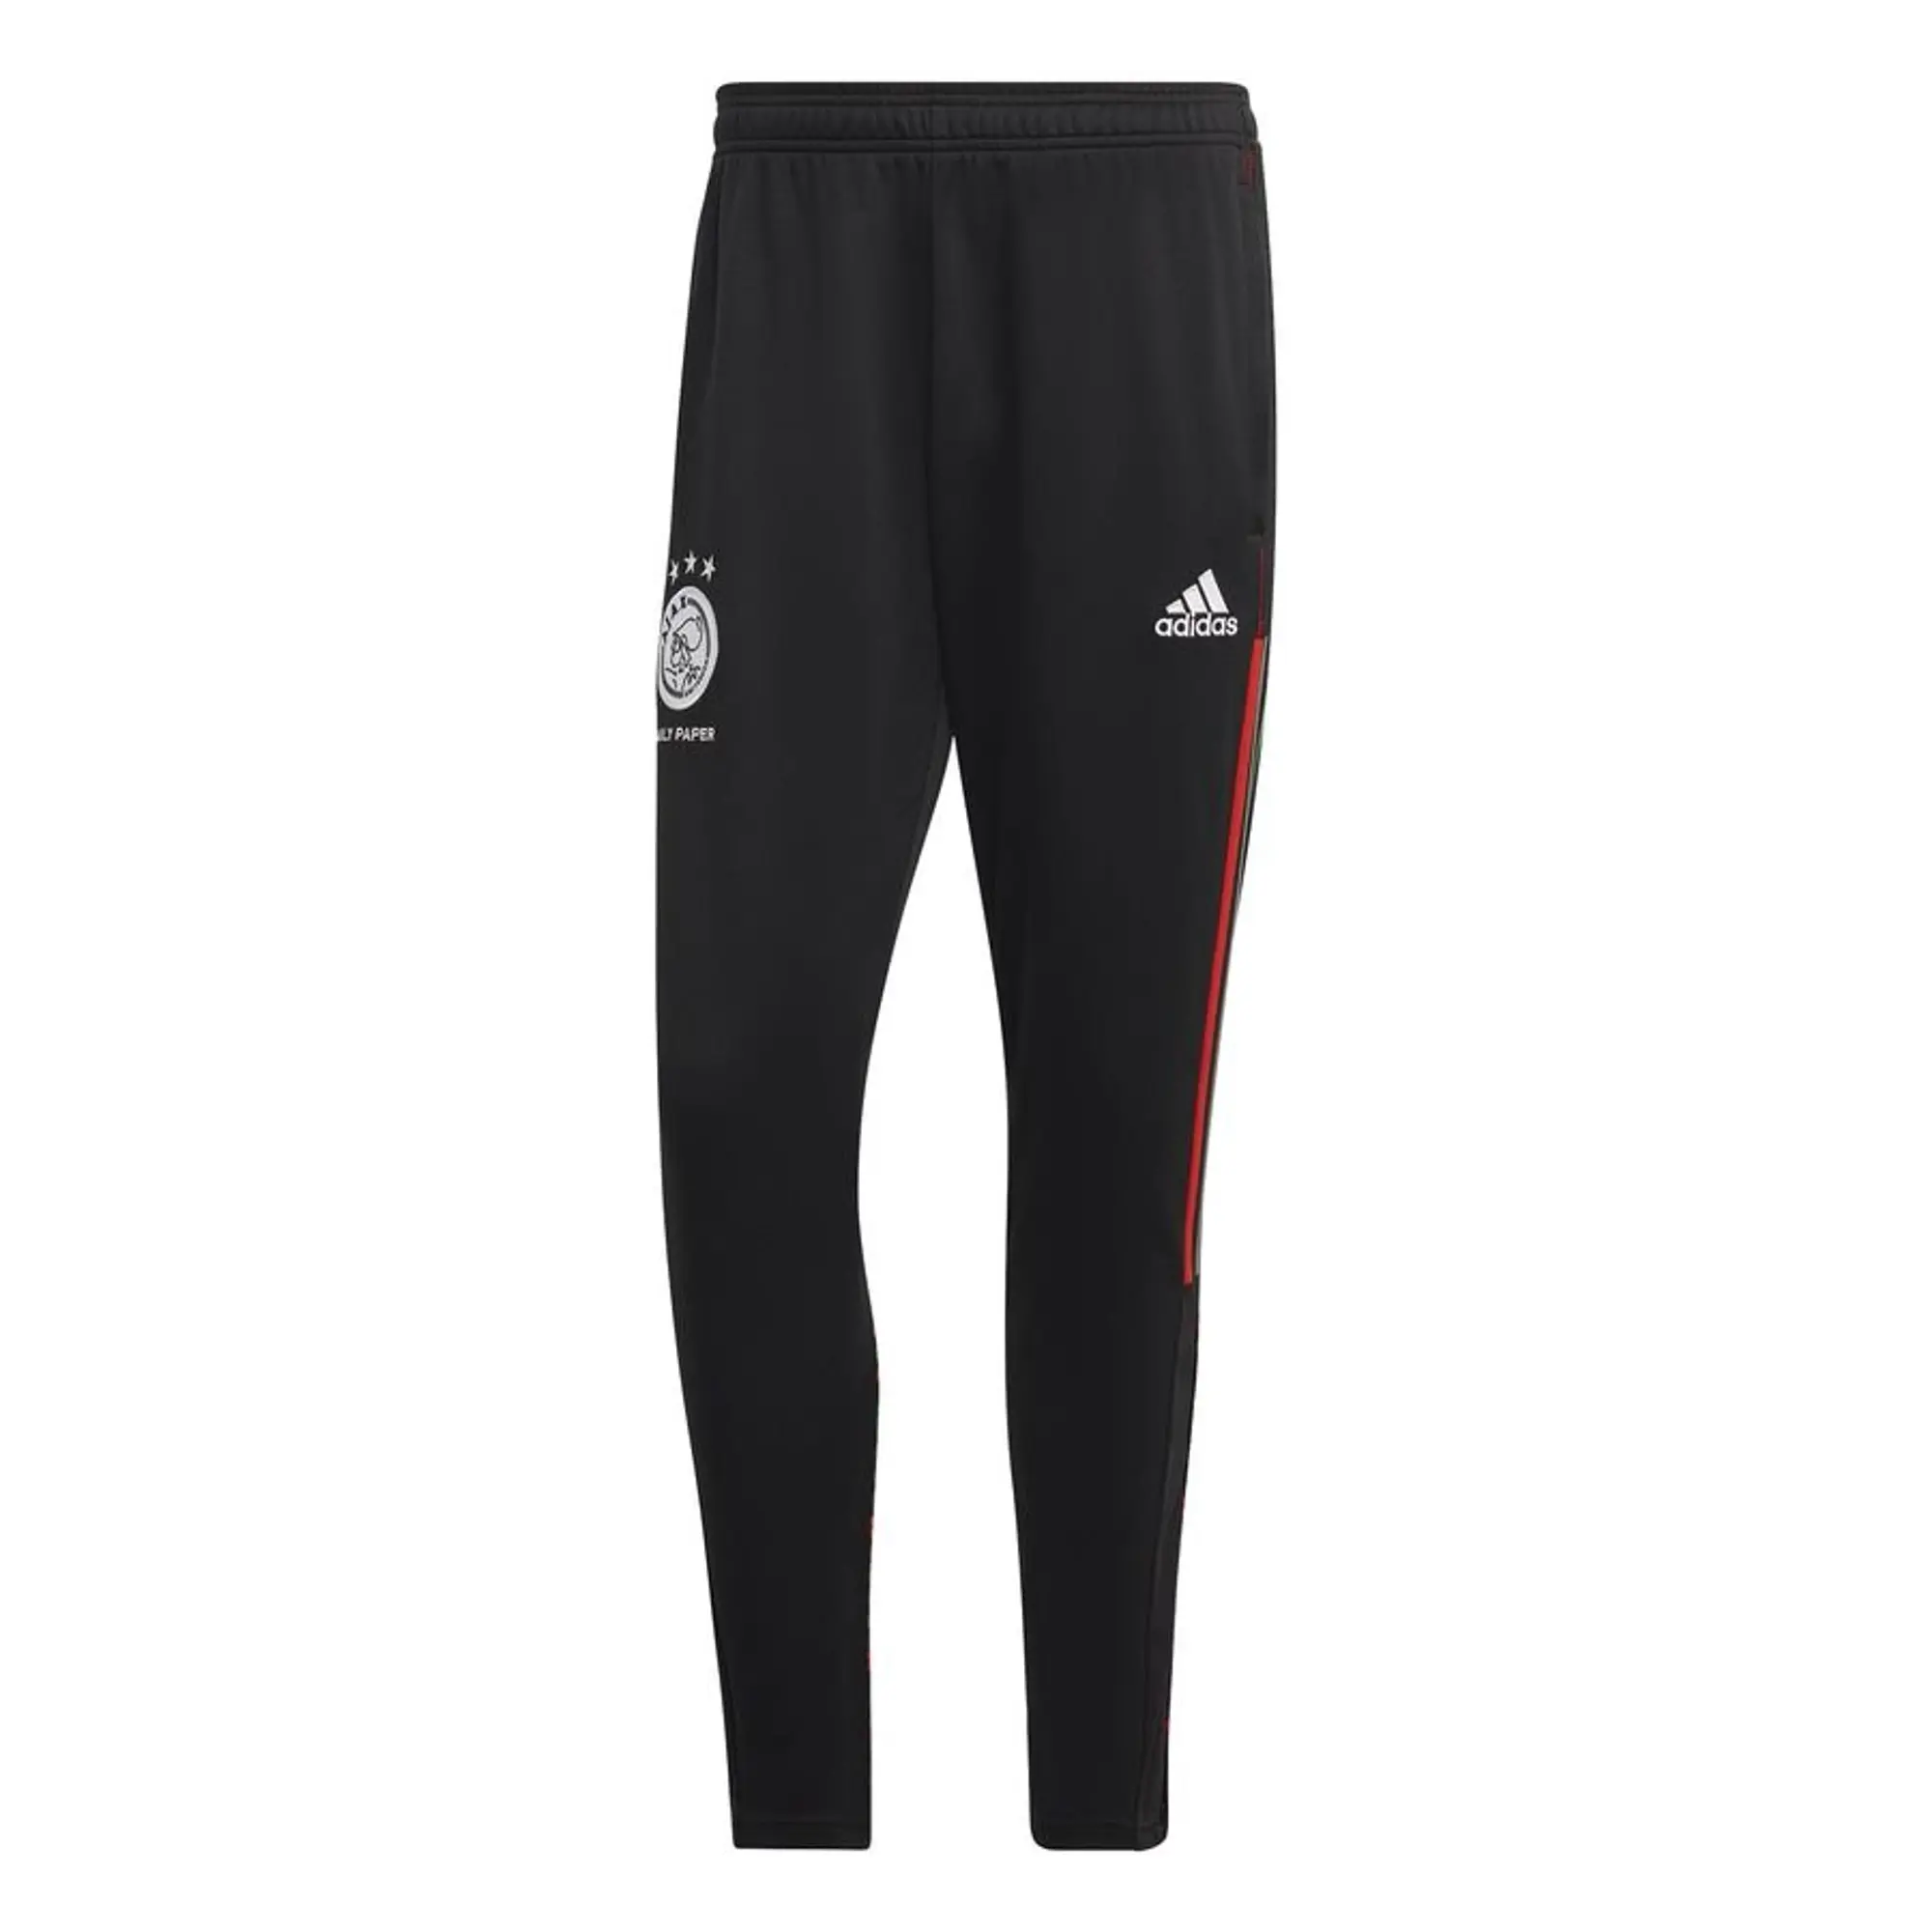 Adidas Ajax Track Pant Men Track Pants Black